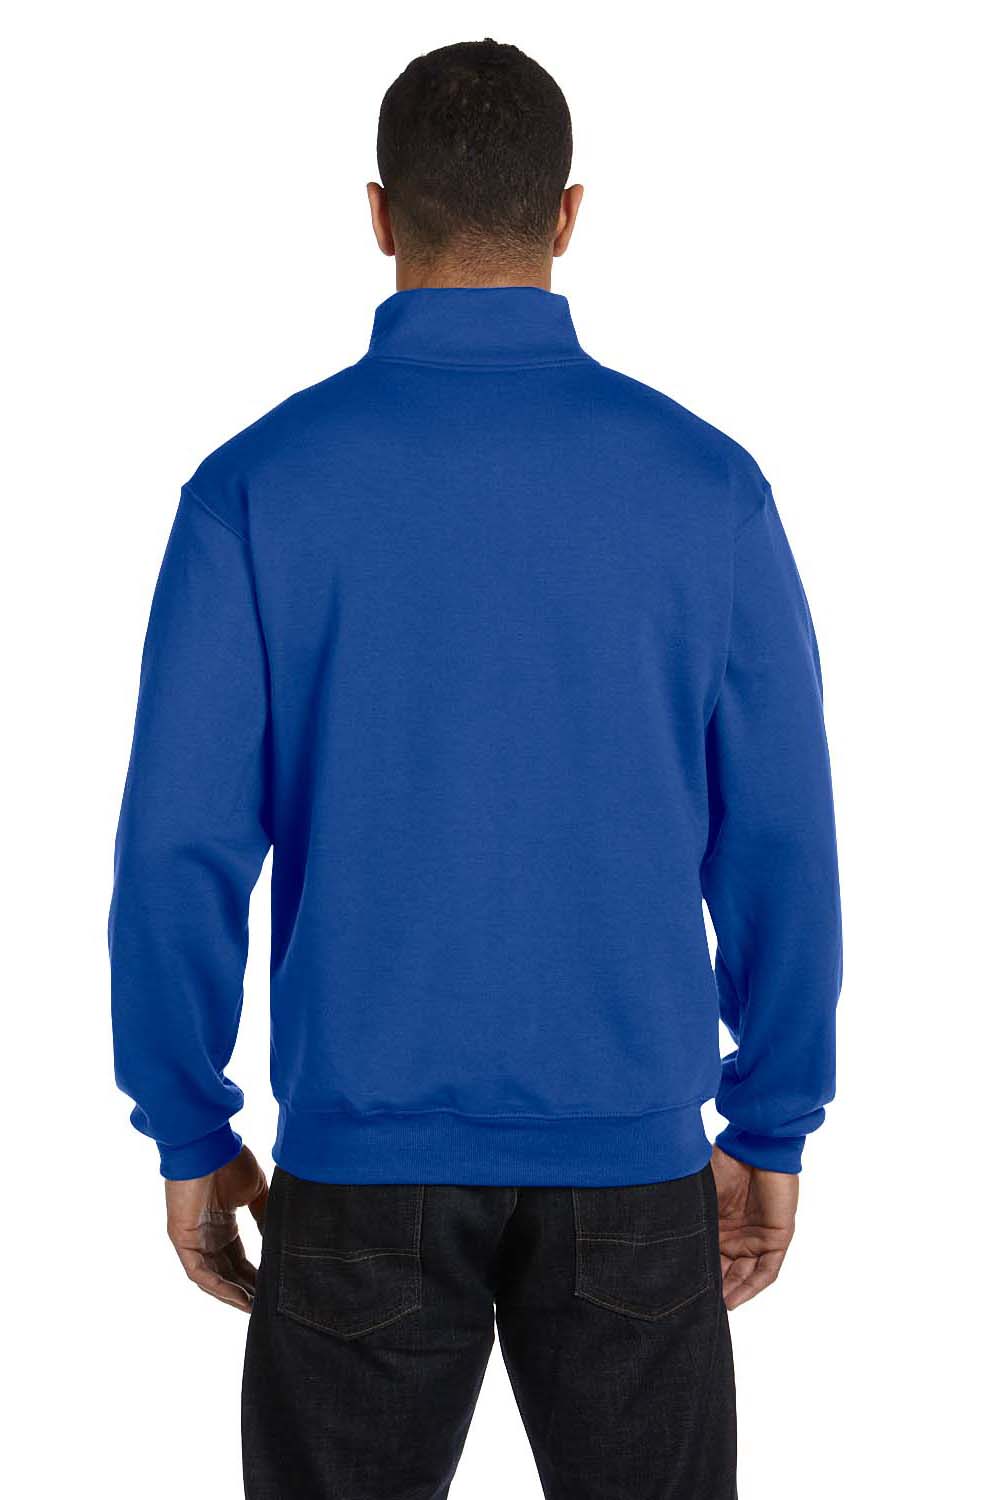 Jerzees 995M Mens NuBlend Fleece 1/4 Zip Sweatshirt Royal Blue Back